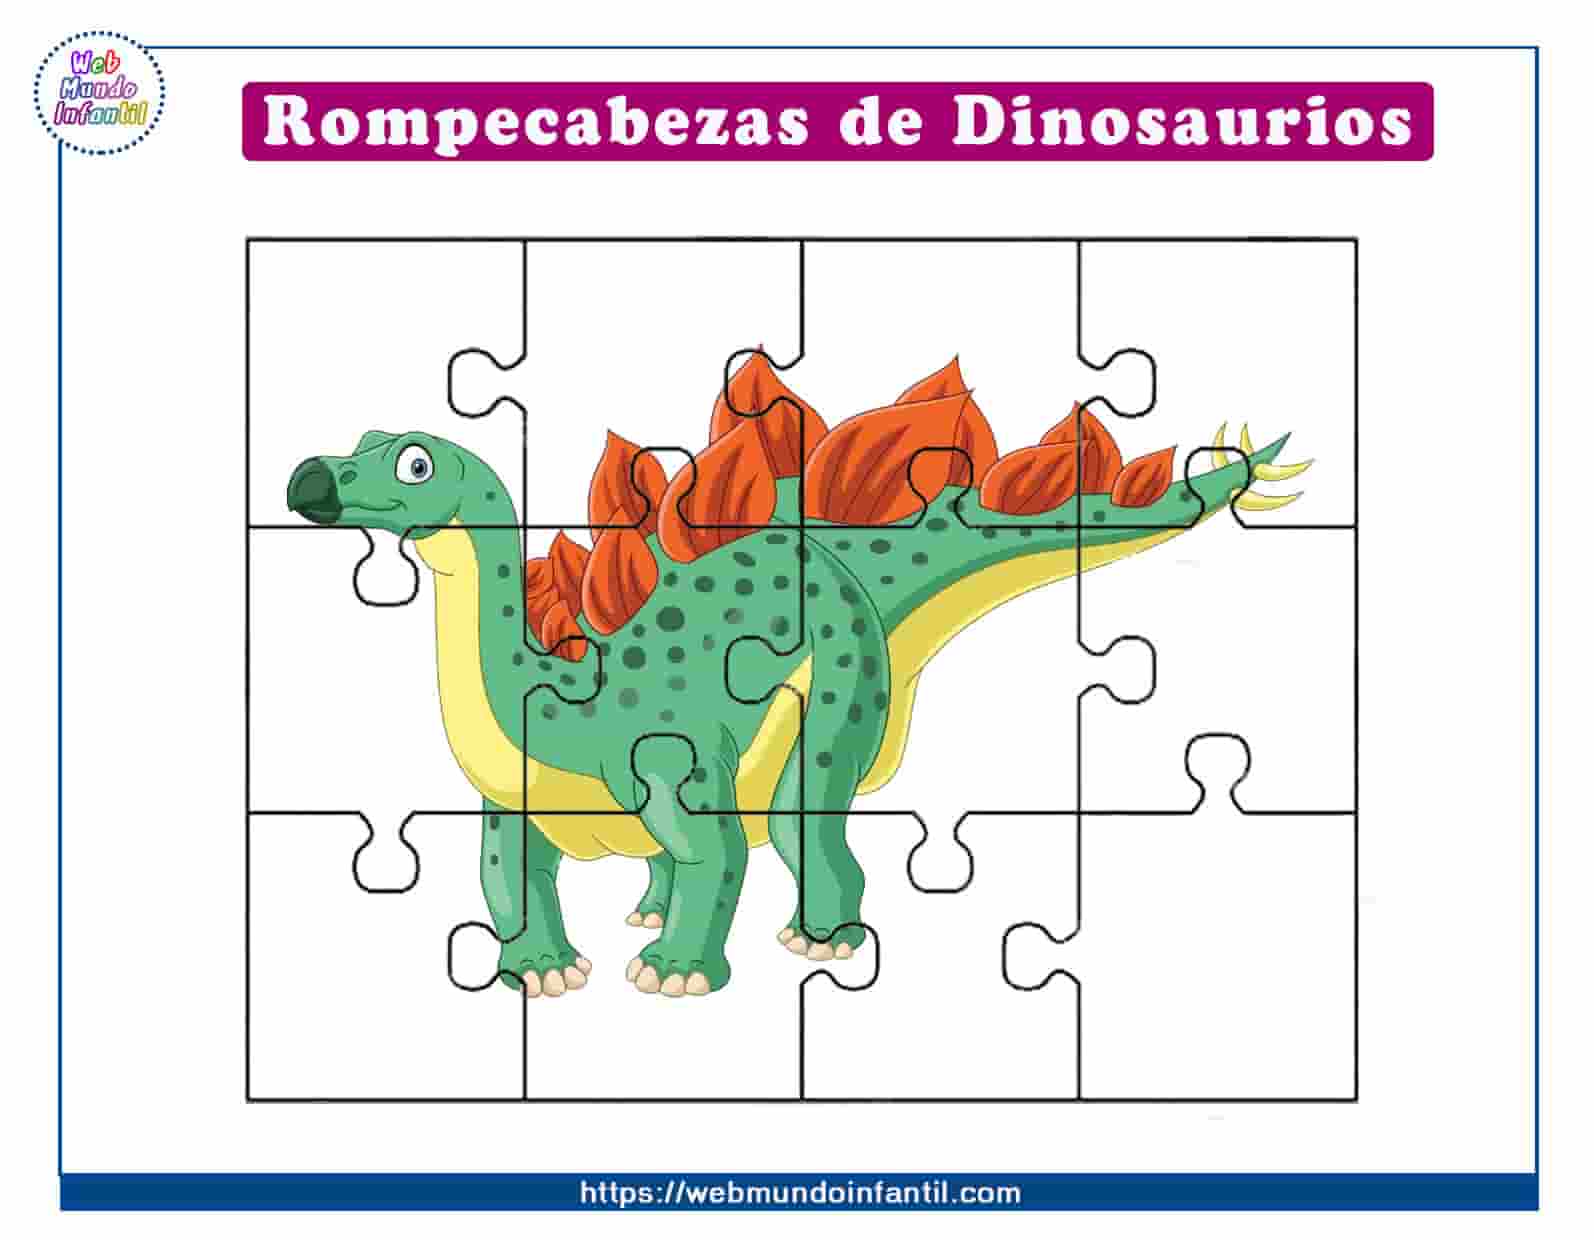 Rompecabezas de dinosaurios imprimir [Puzzles]